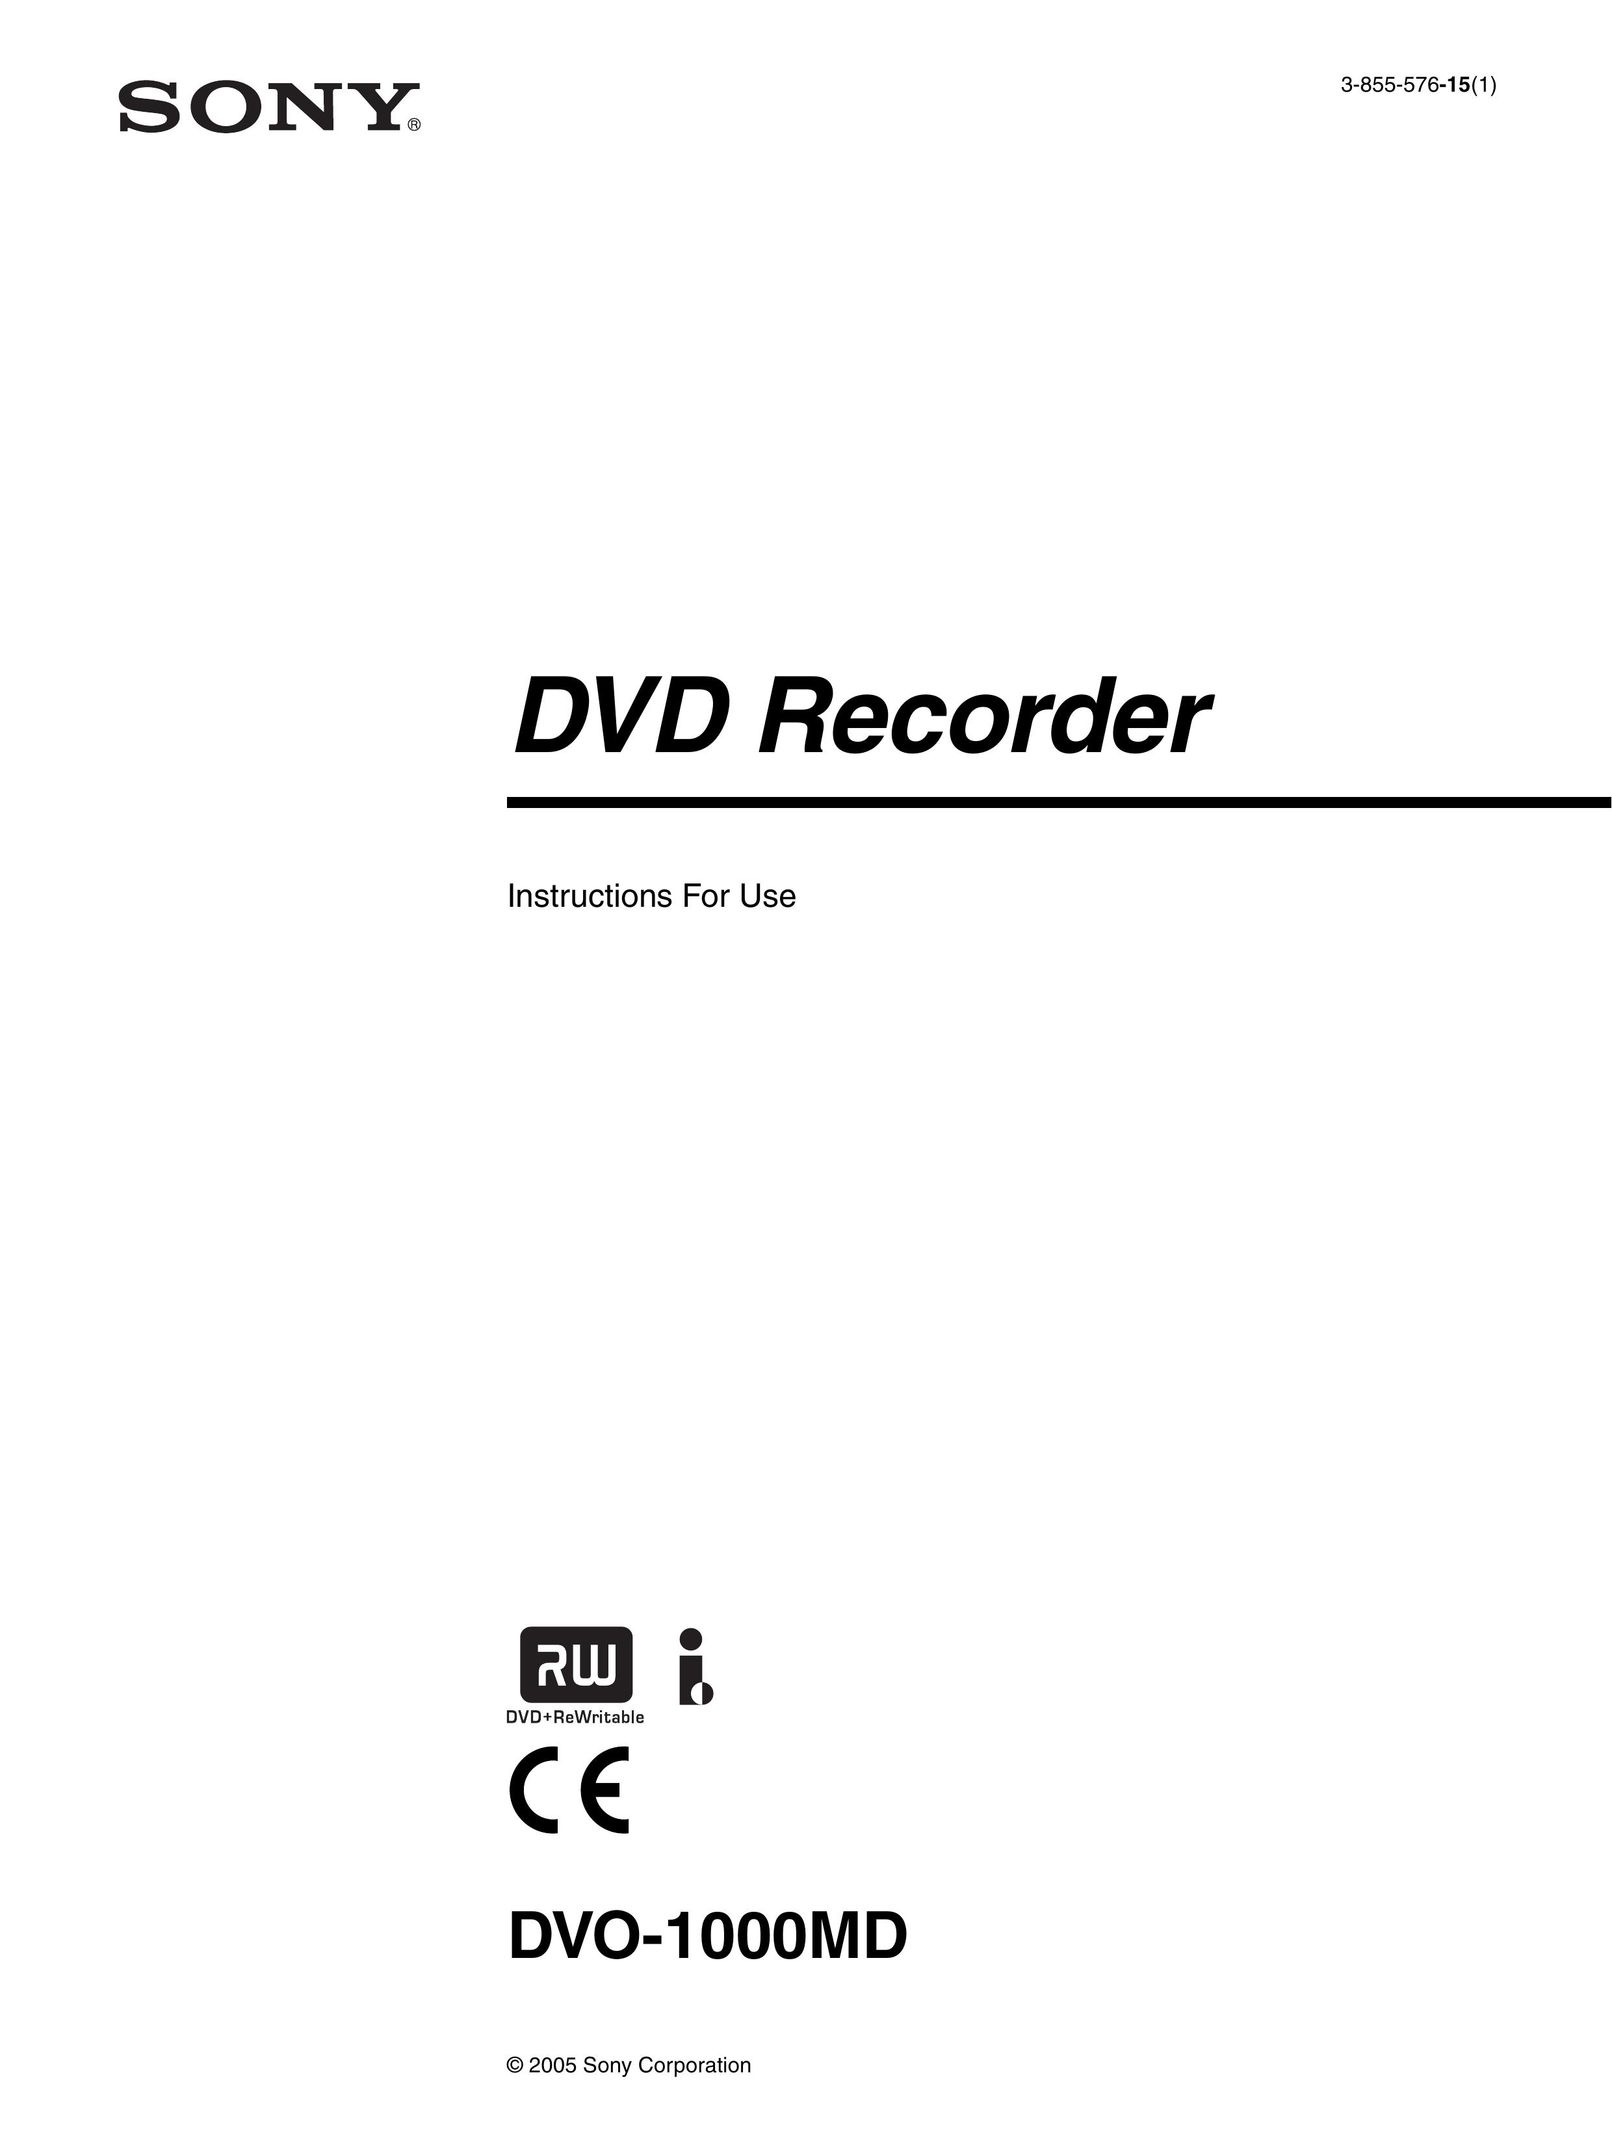 Sony DVO-1000MD DVD Recorder User Manual